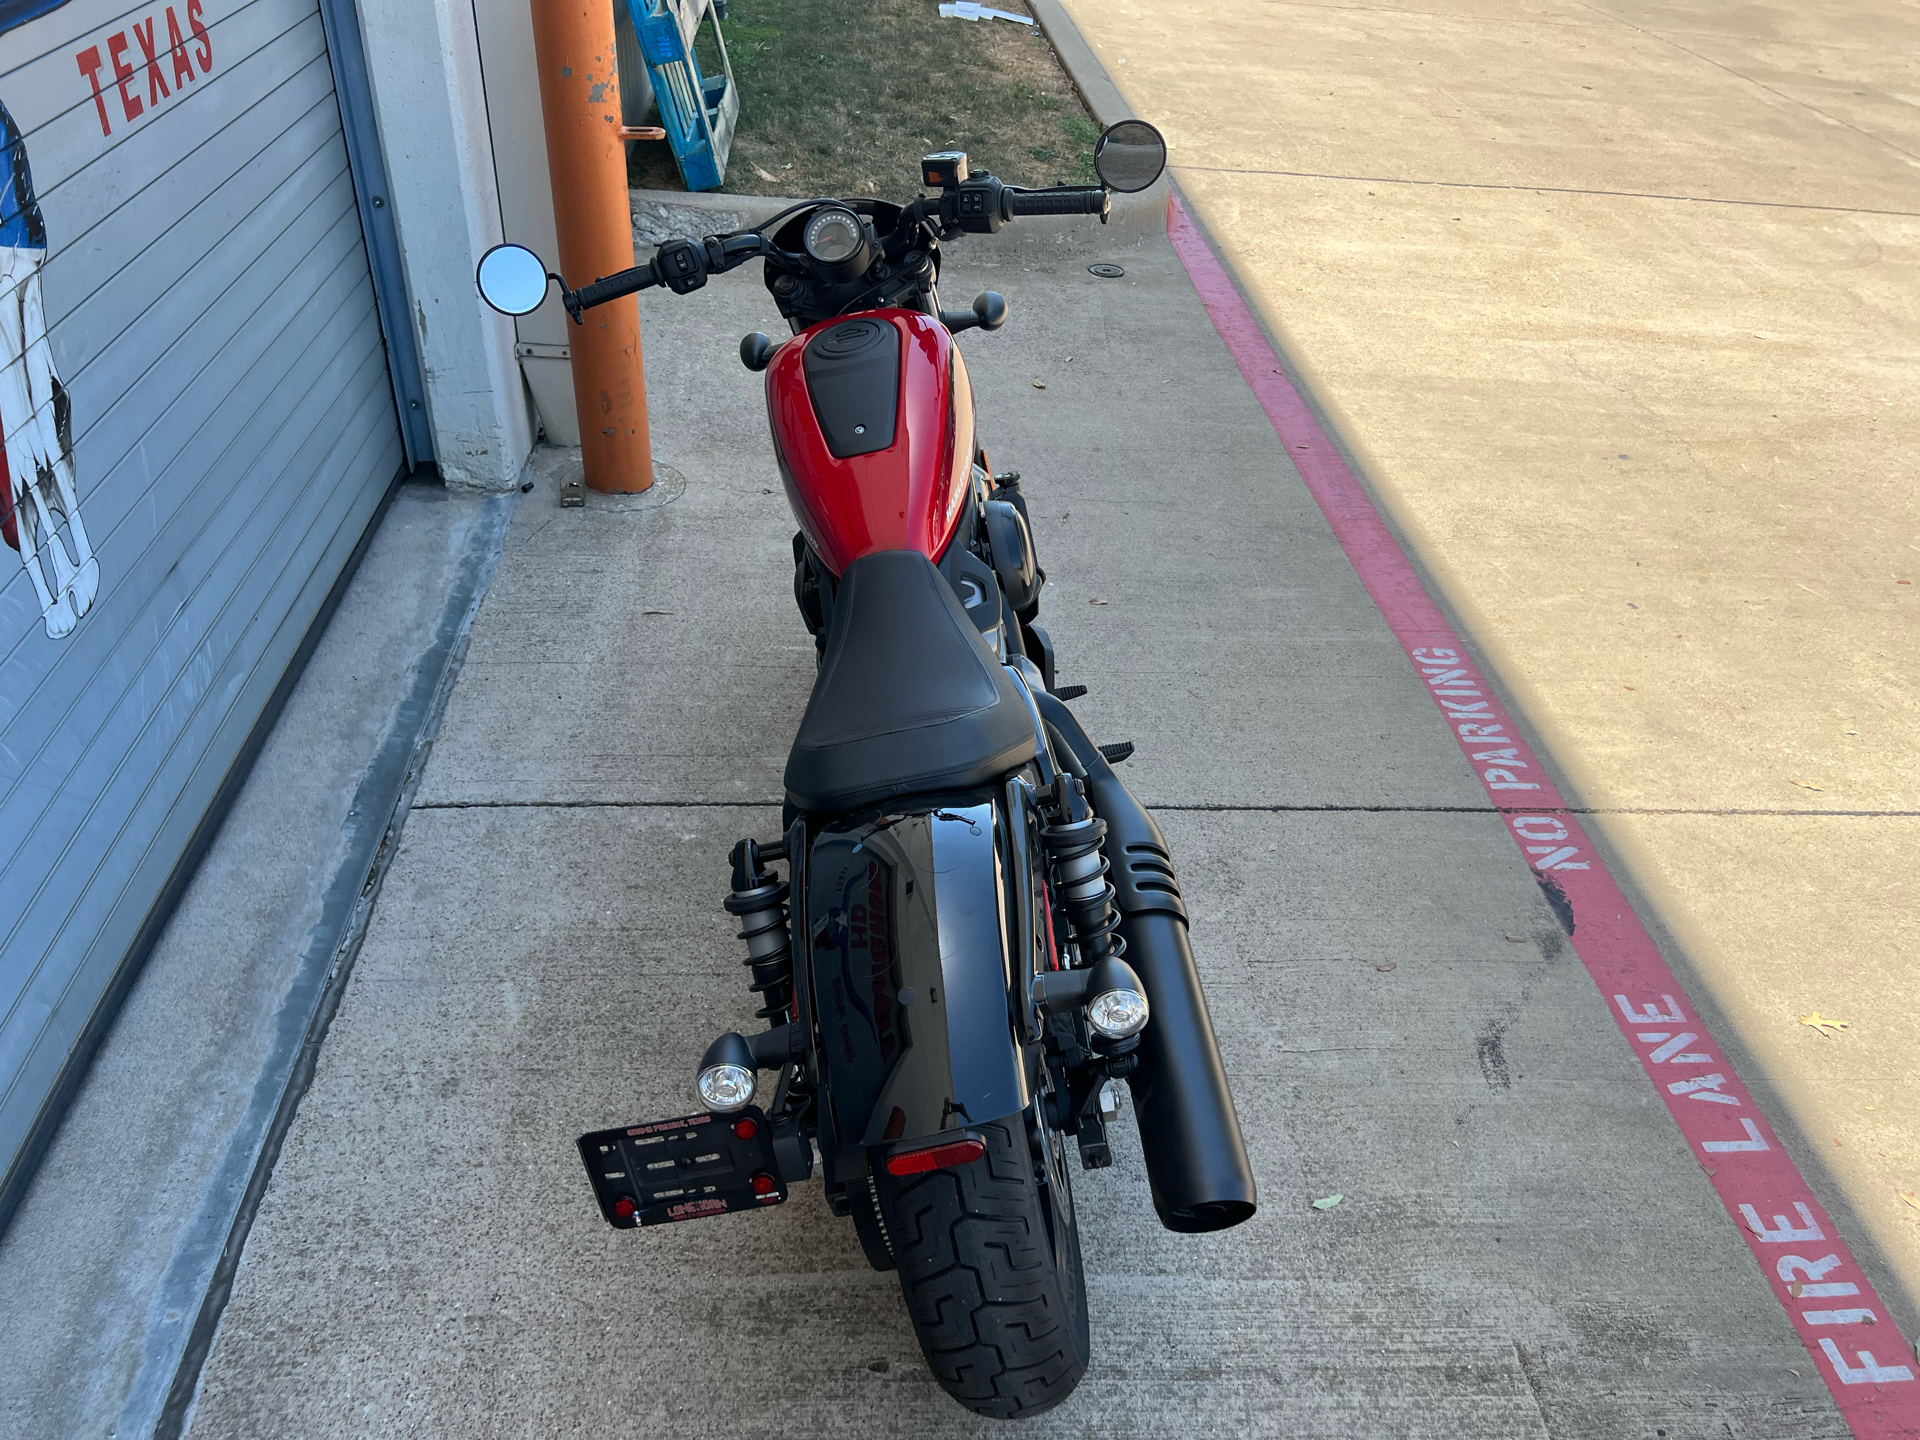 2022 Harley-Davidson Nightster™ in Grand Prairie, Texas - Photo 6